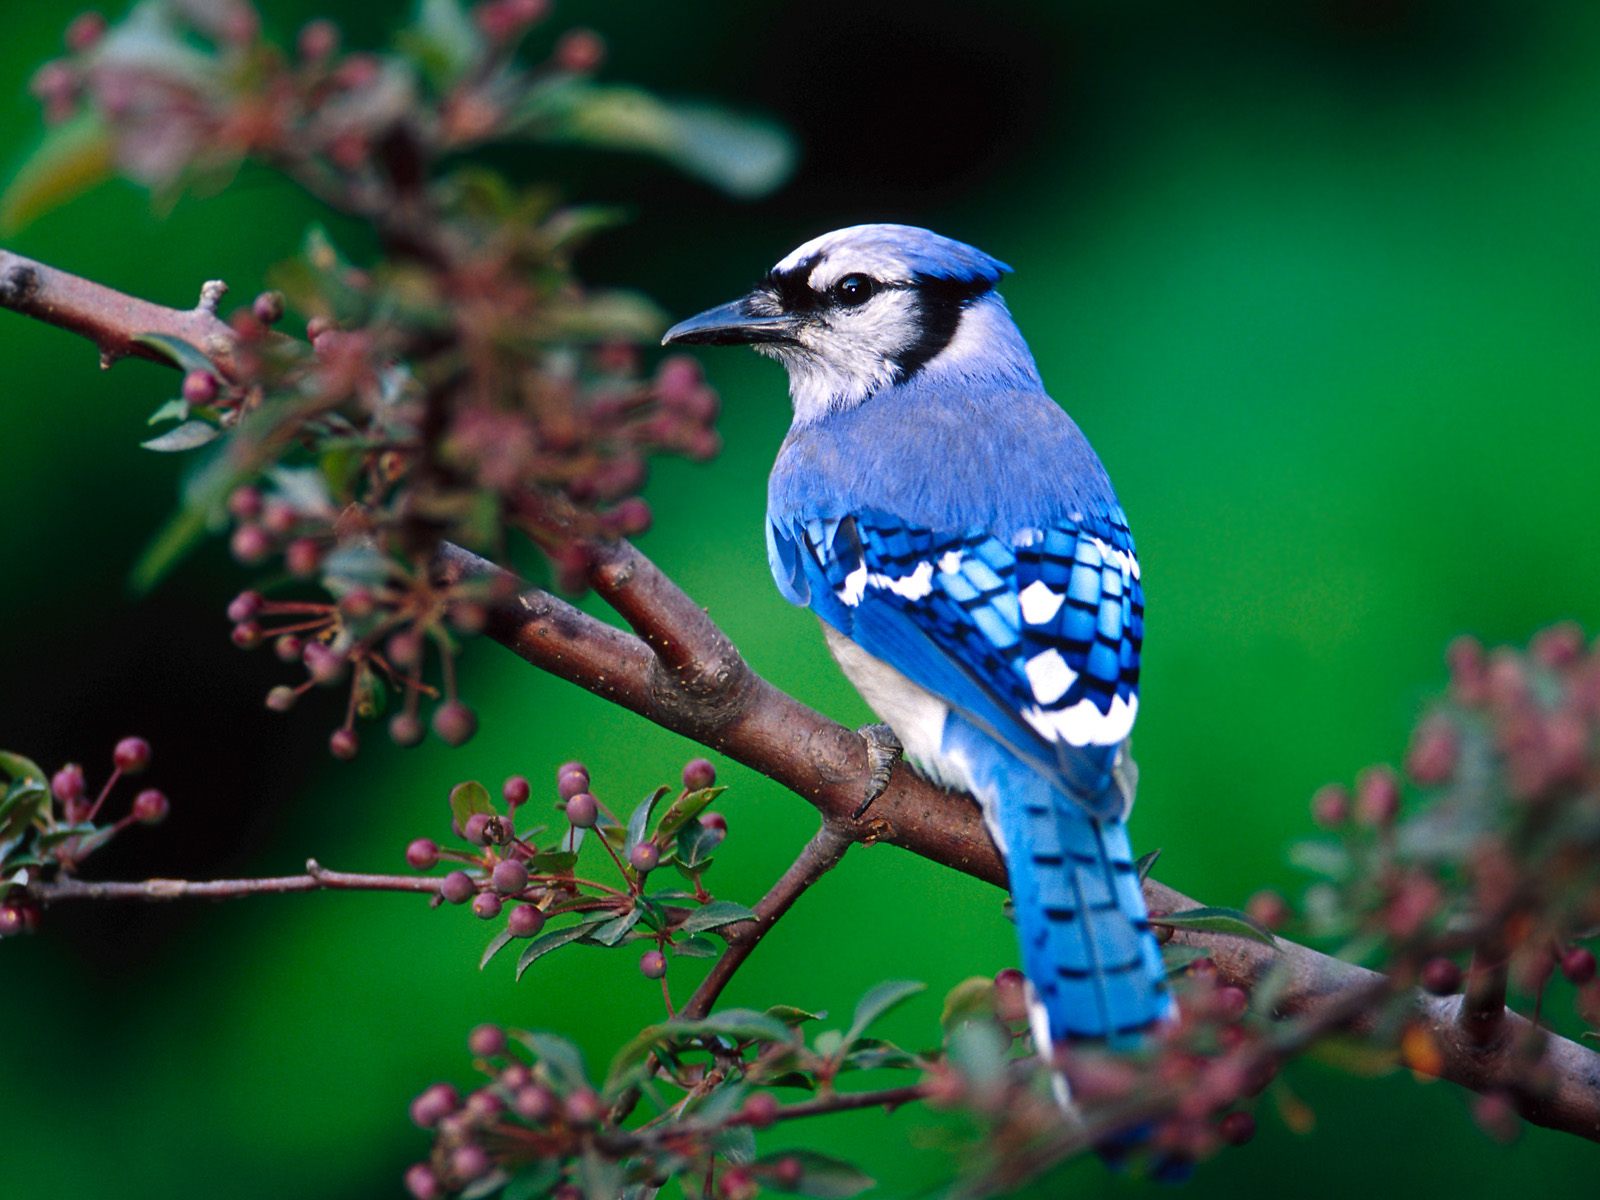 https://blogger.googleusercontent.com/img/b/R29vZ2xl/AVvXsEjURMzAco5ncmgvDeHqAmbAi1pbgu01b6hX4xAGjS2V97J5bGSyPOcg1TPaUiD7Zth2EGfC7jEmXvoNk1vafTkPZ1NPArf0eLWm1dqJoVwhwB6eZx7CBBE5BtRsOTYrSWugcLPHXvtaywlp/s1600/beautiful-green-nature-with-birds-bue-jay-bird.JPG